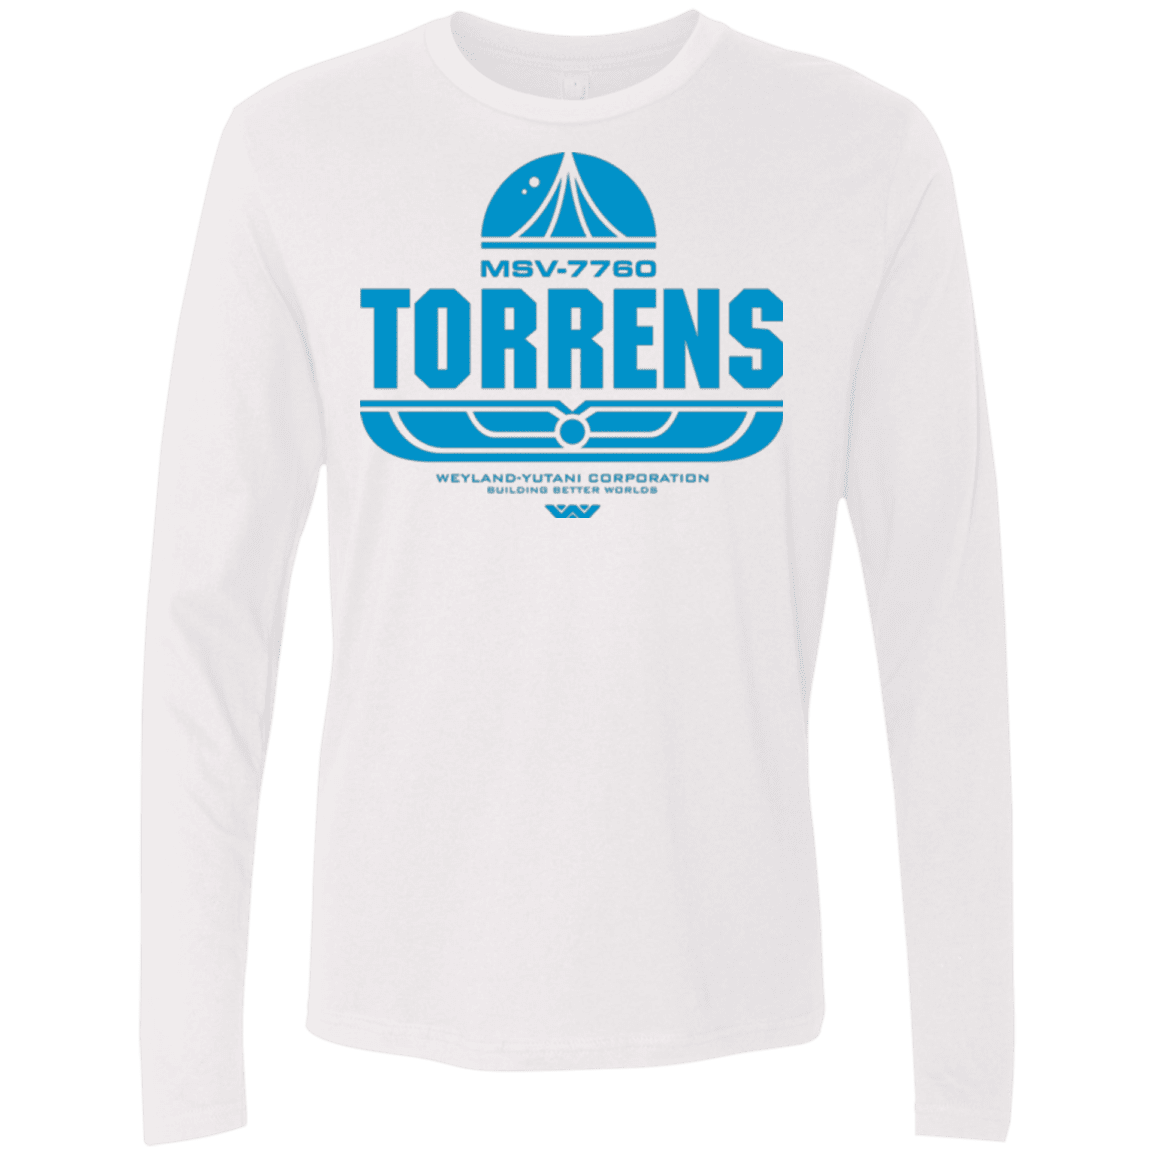 T-Shirts White / Small Torrens Men's Premium Long Sleeve